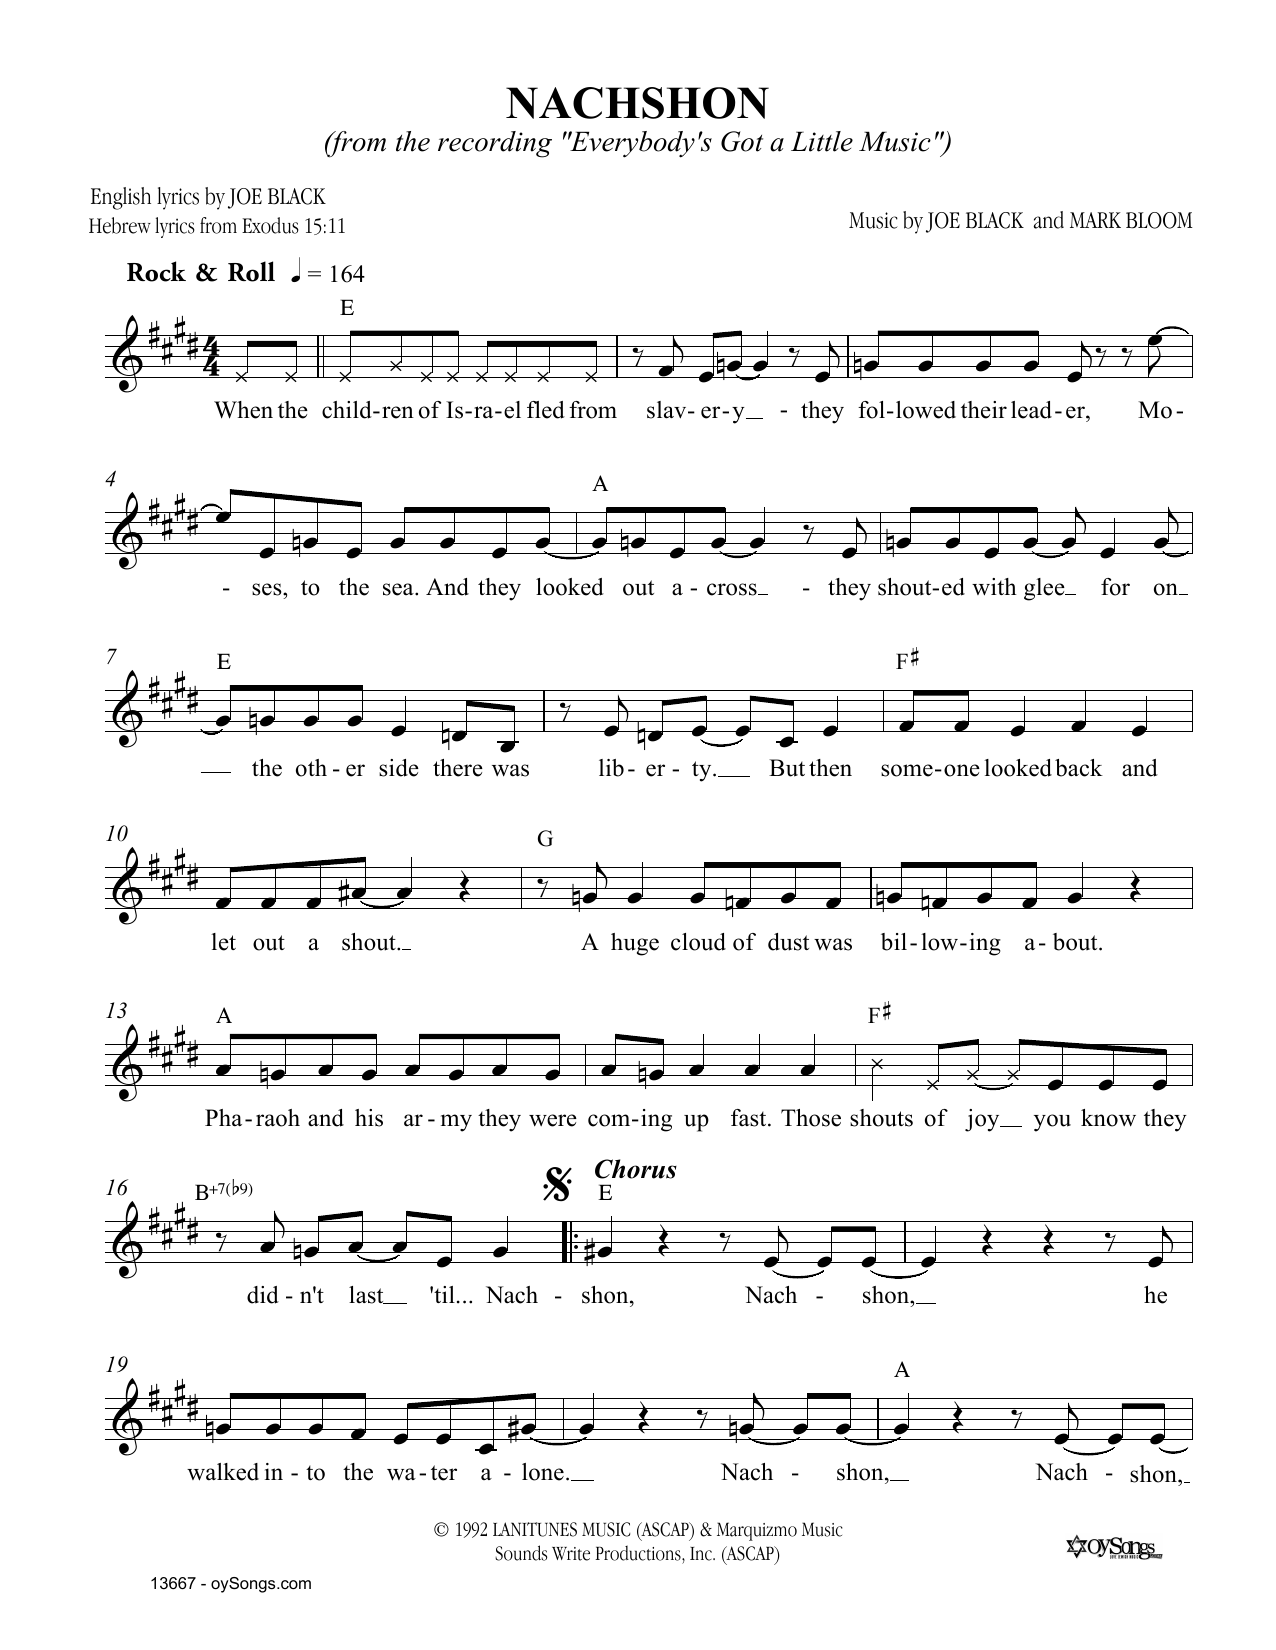 Joe Black Nachshon Sheet Music Notes & Chords for Melody Line, Lyrics & Chords - Download or Print PDF